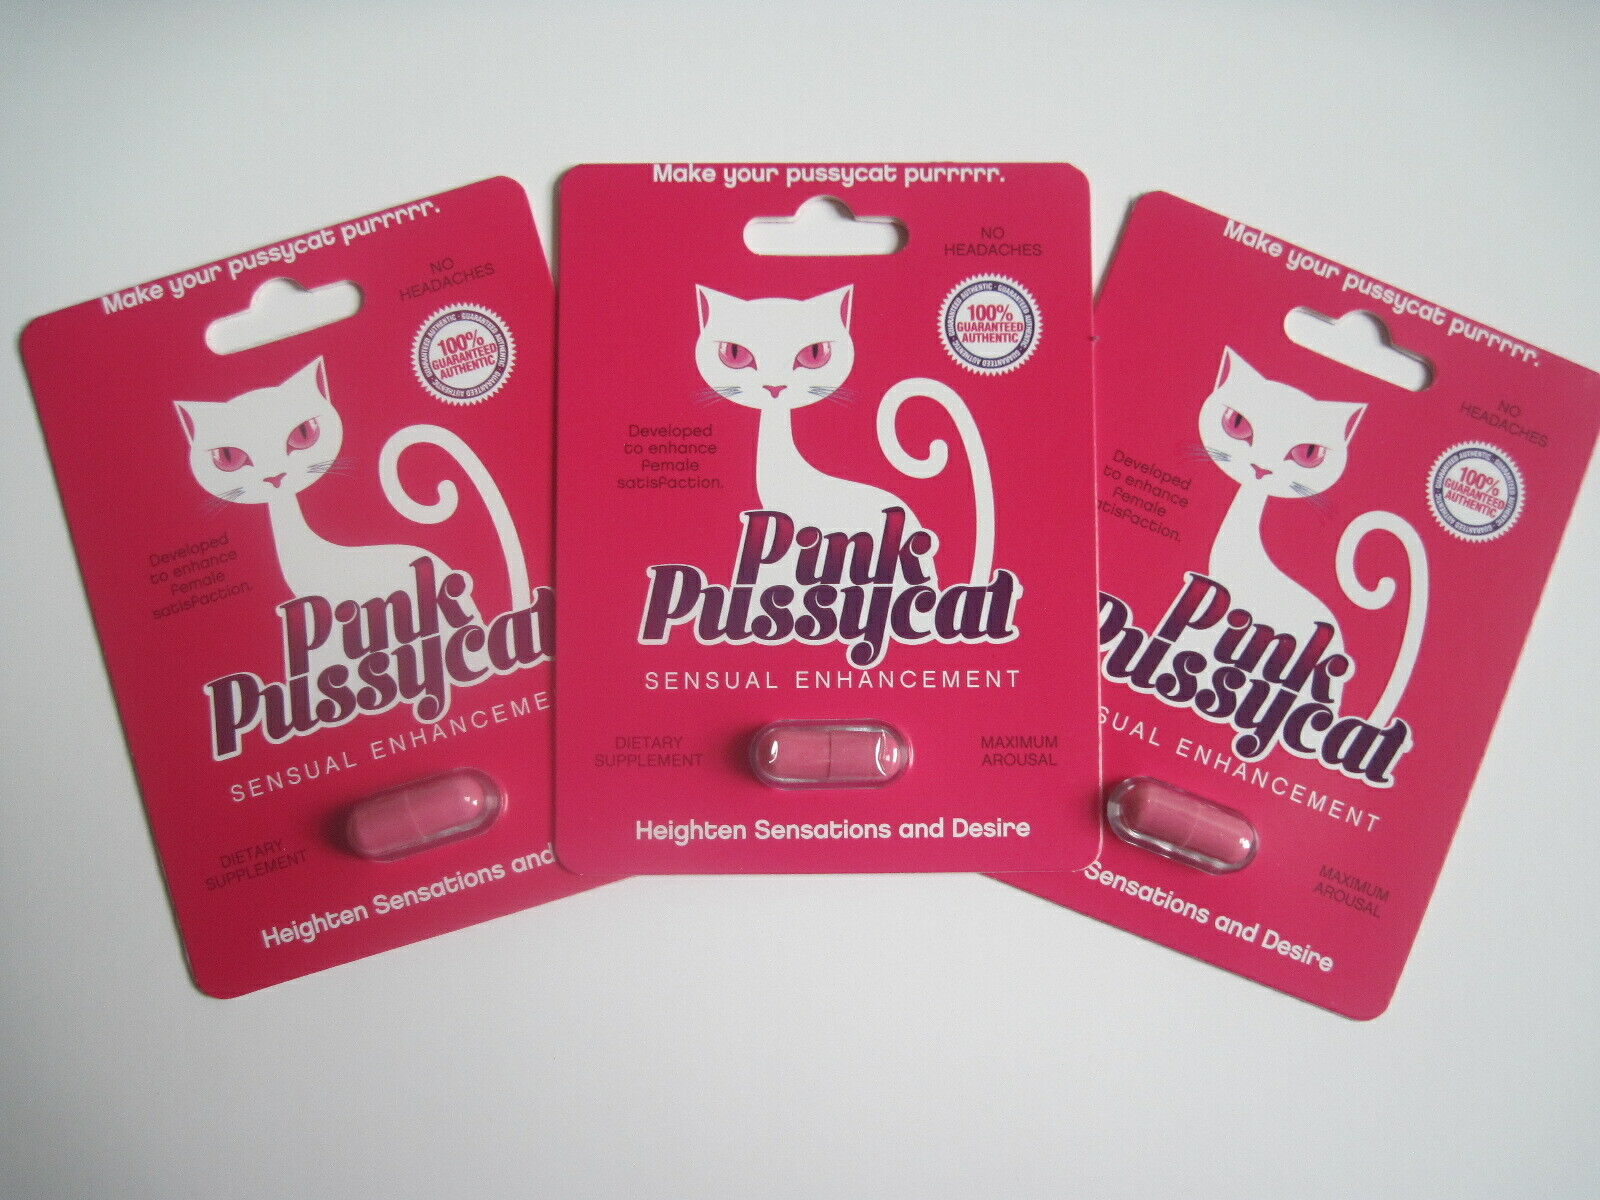 Pinkk Pussycat (3 Pack) .